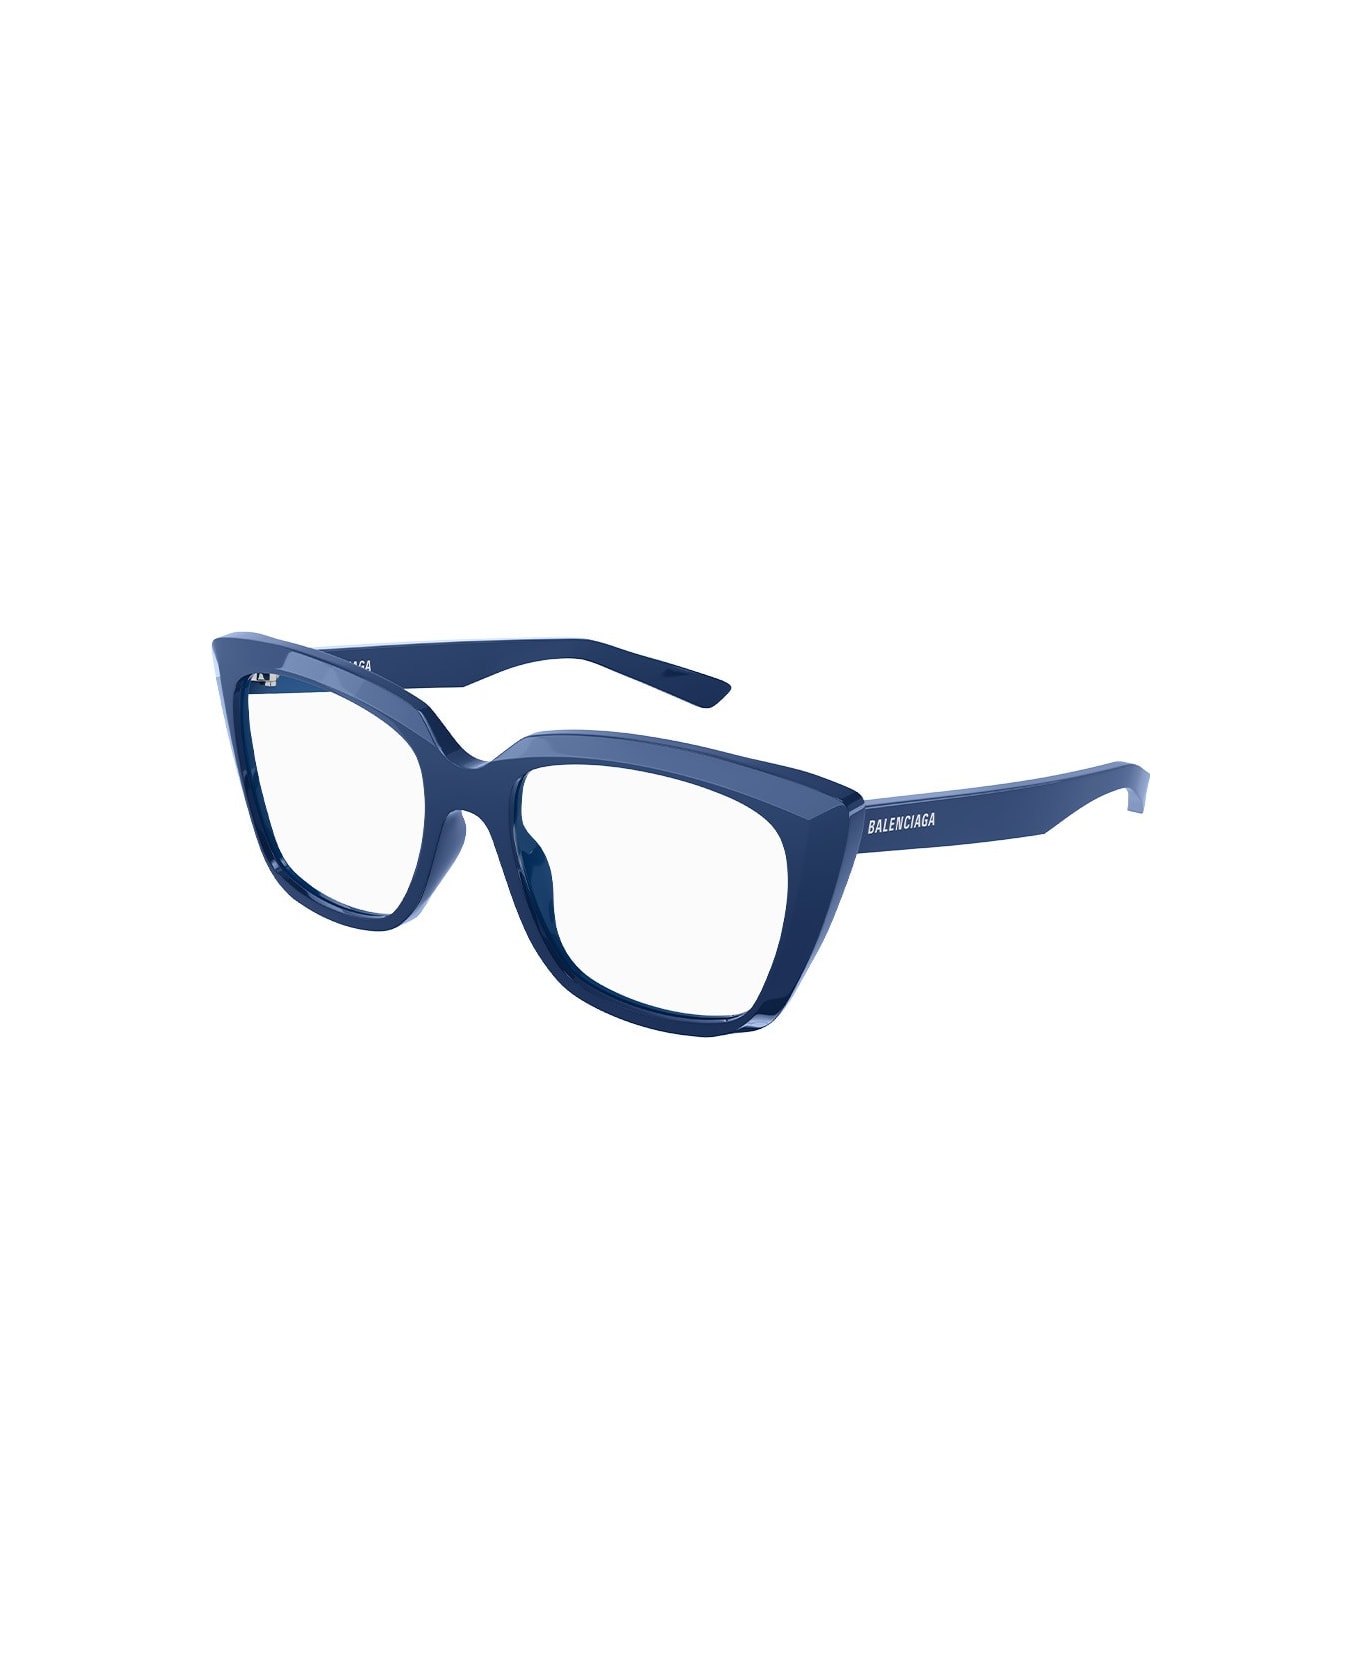 Balenciaga Eyewear Glasses - Blu